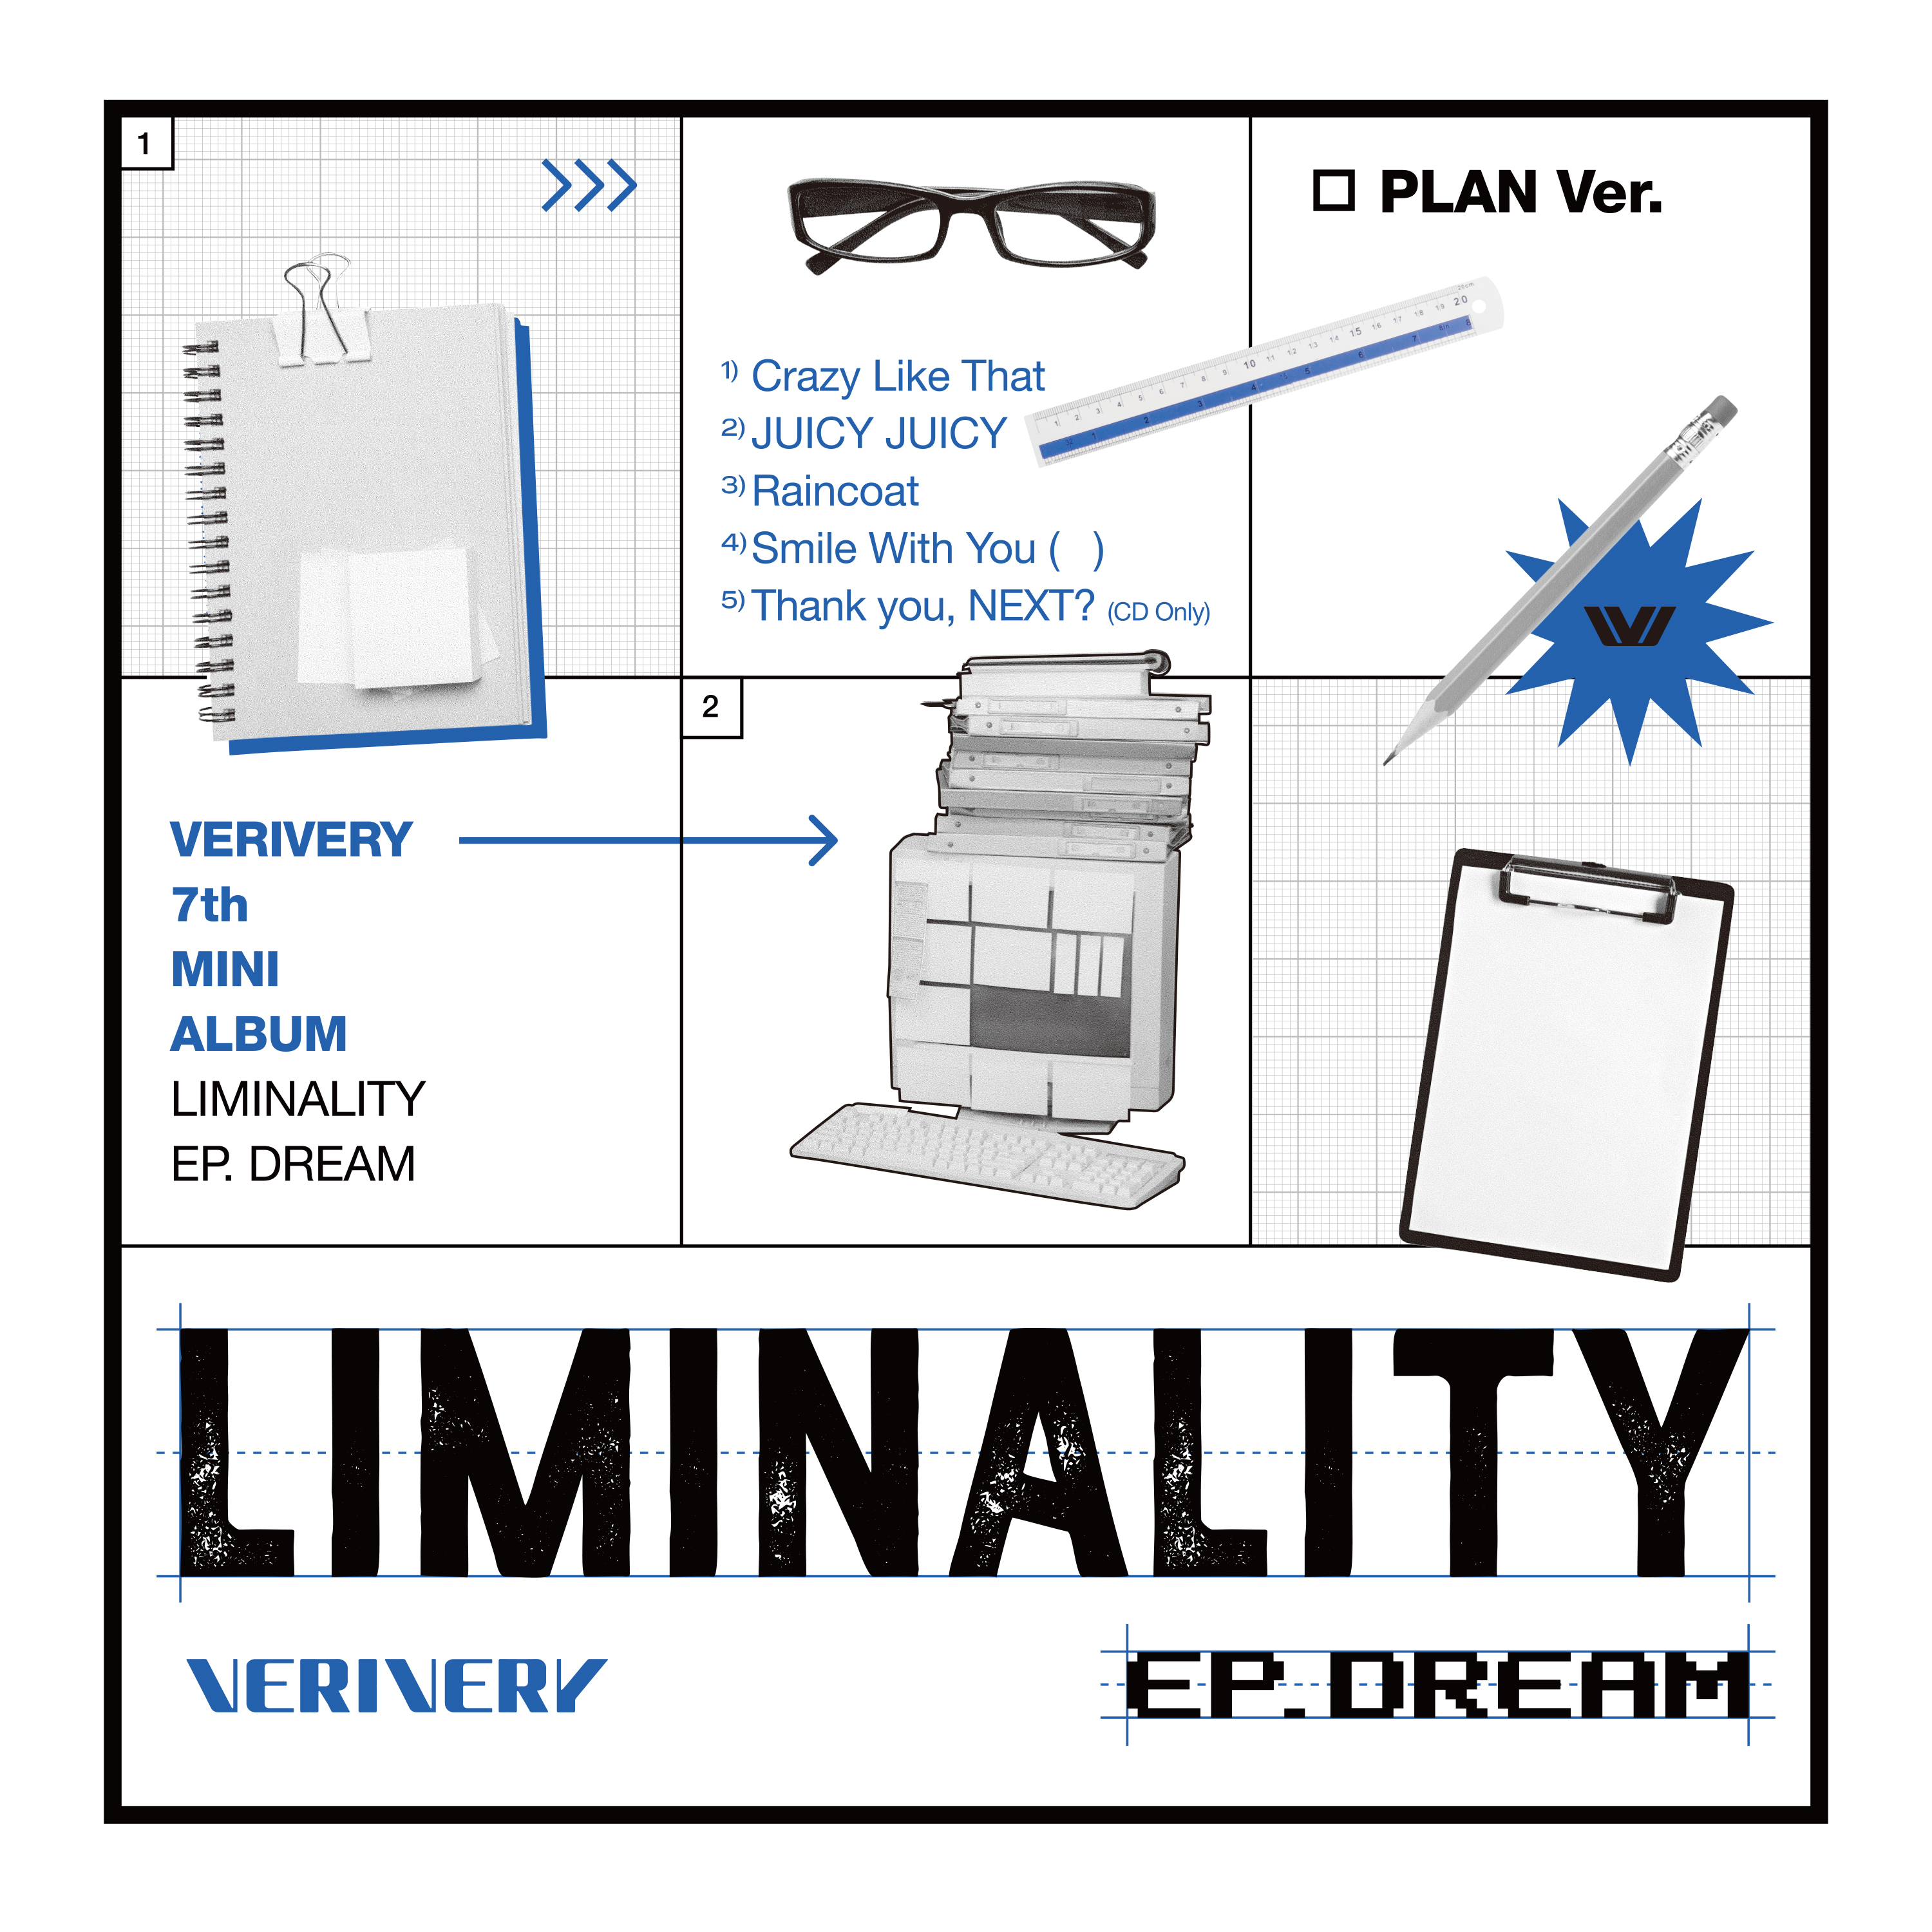 VERIVERY - 7th Mini Album [Liminality - EP.DREAM] (PLAN ver.)케이팝스토어(kpop store)